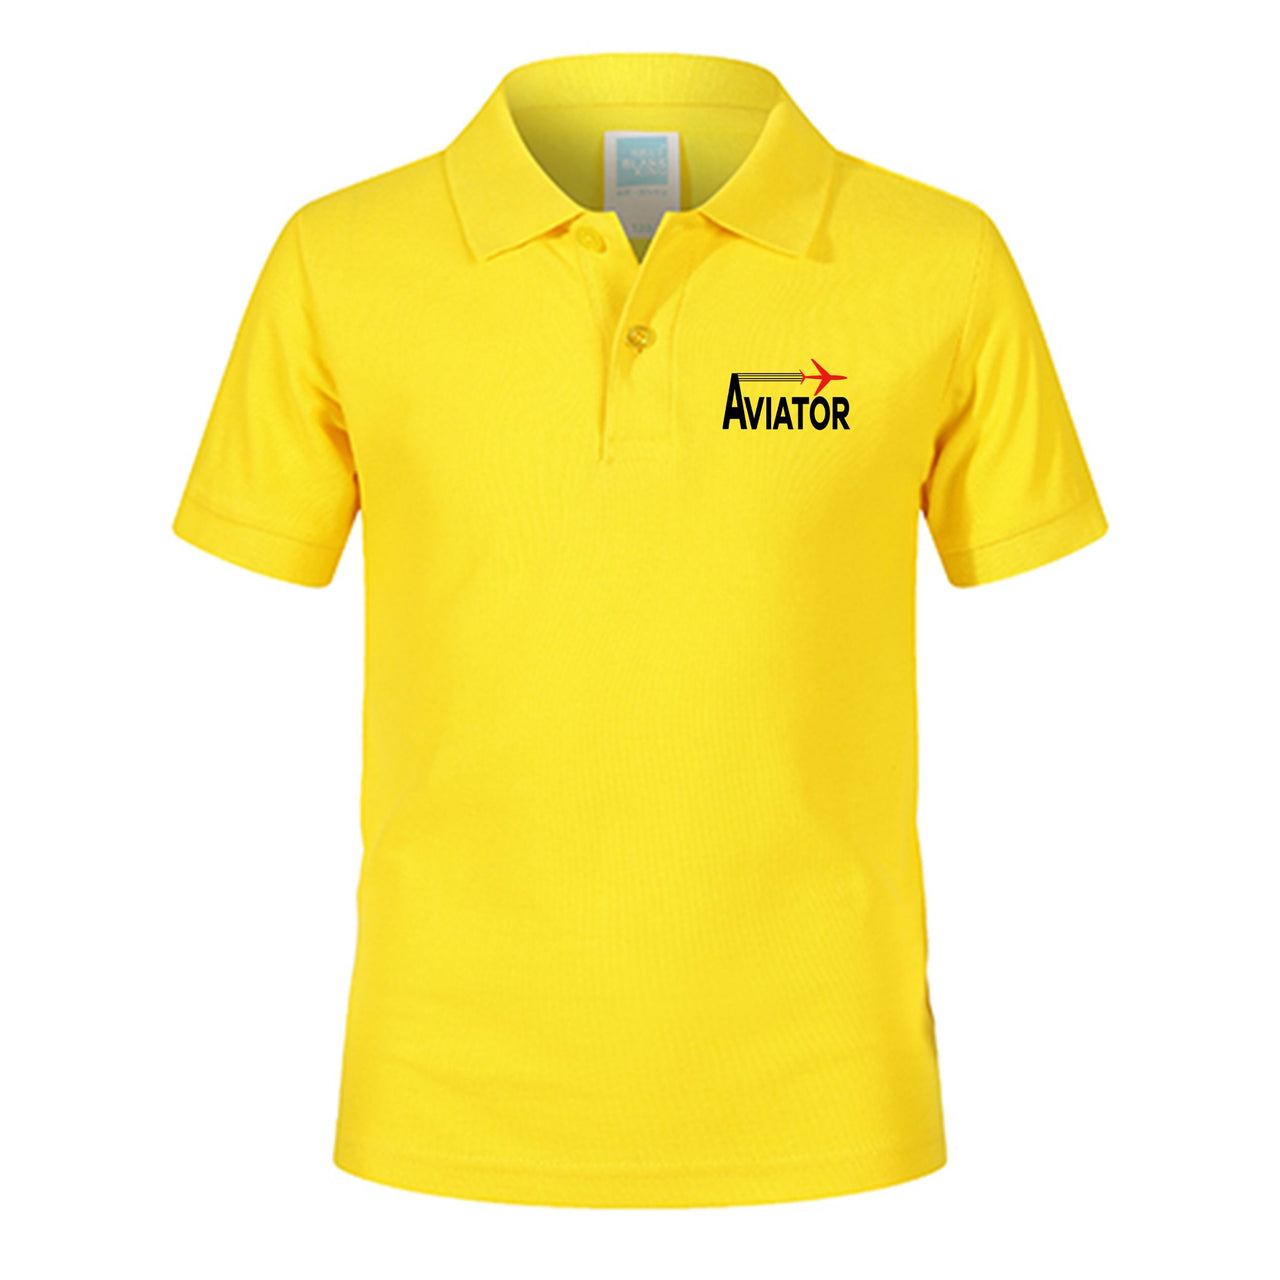 Aviator Designed Children Polo T-Shirts